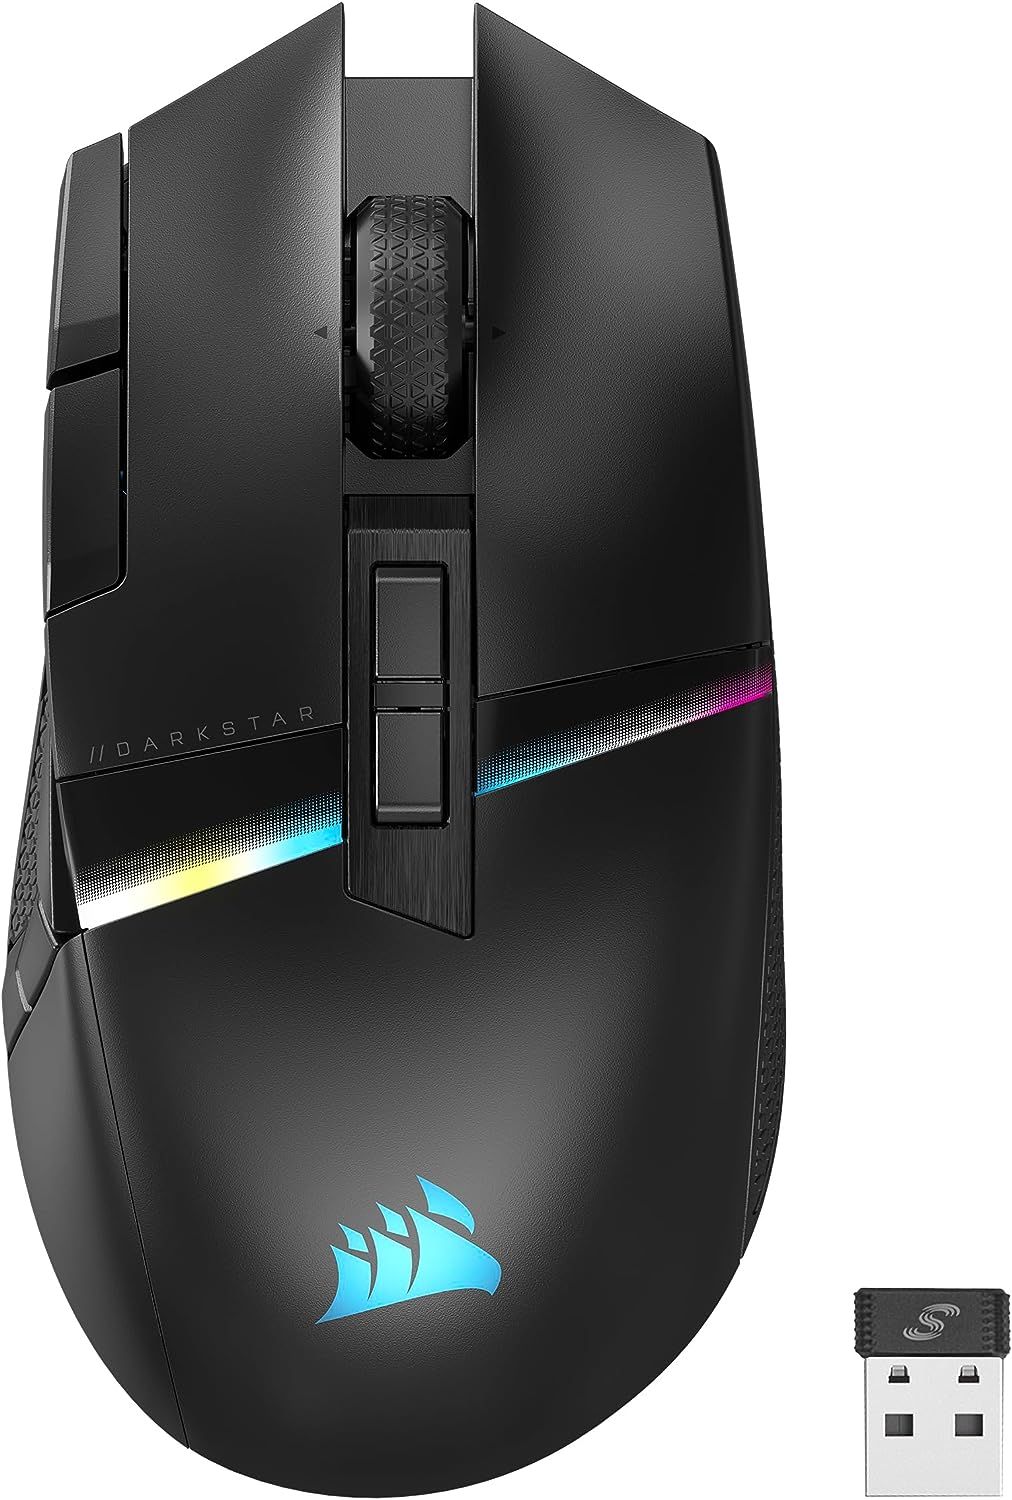 Corsair Darkstar RGB Gaming Mouse